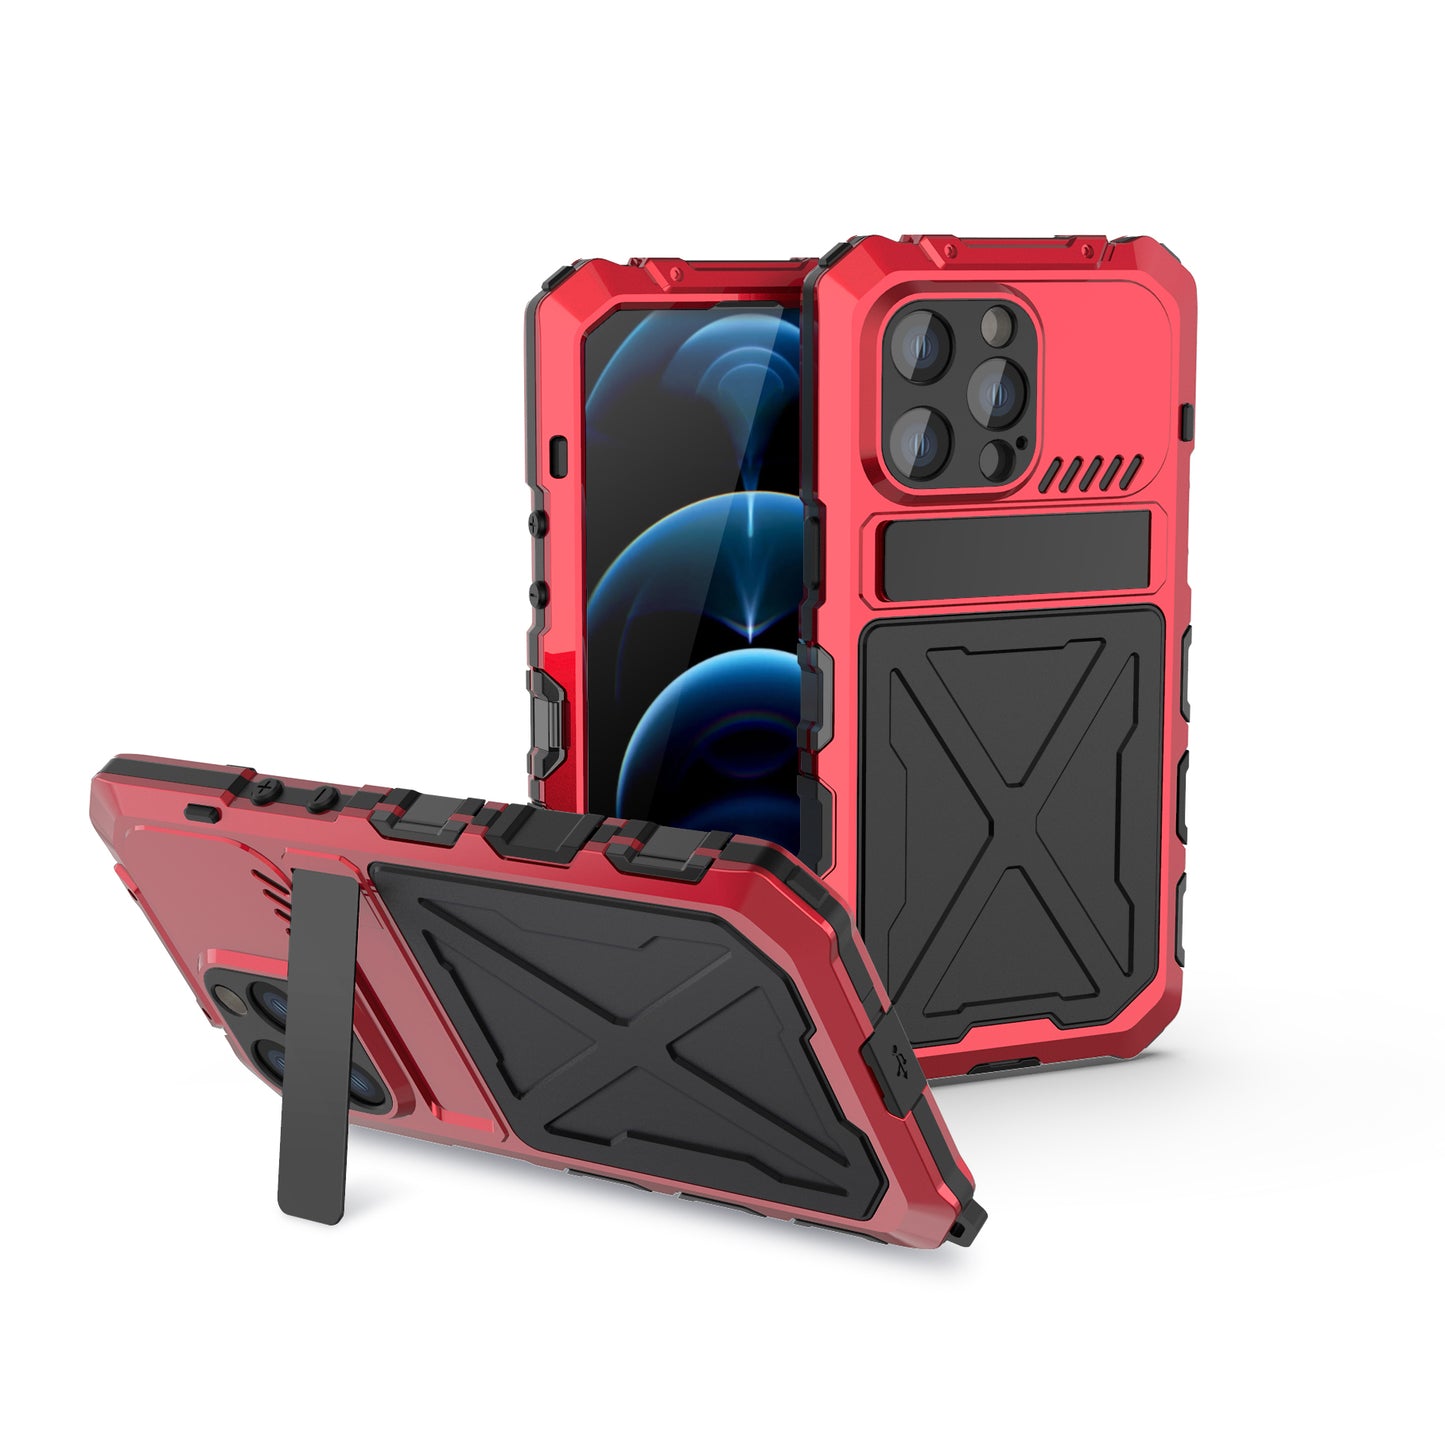 Luxury Military iPhone 14 Pro Max Kickstand Case Apple 14 Plus Wireless Charging Cover Lock Free Screw